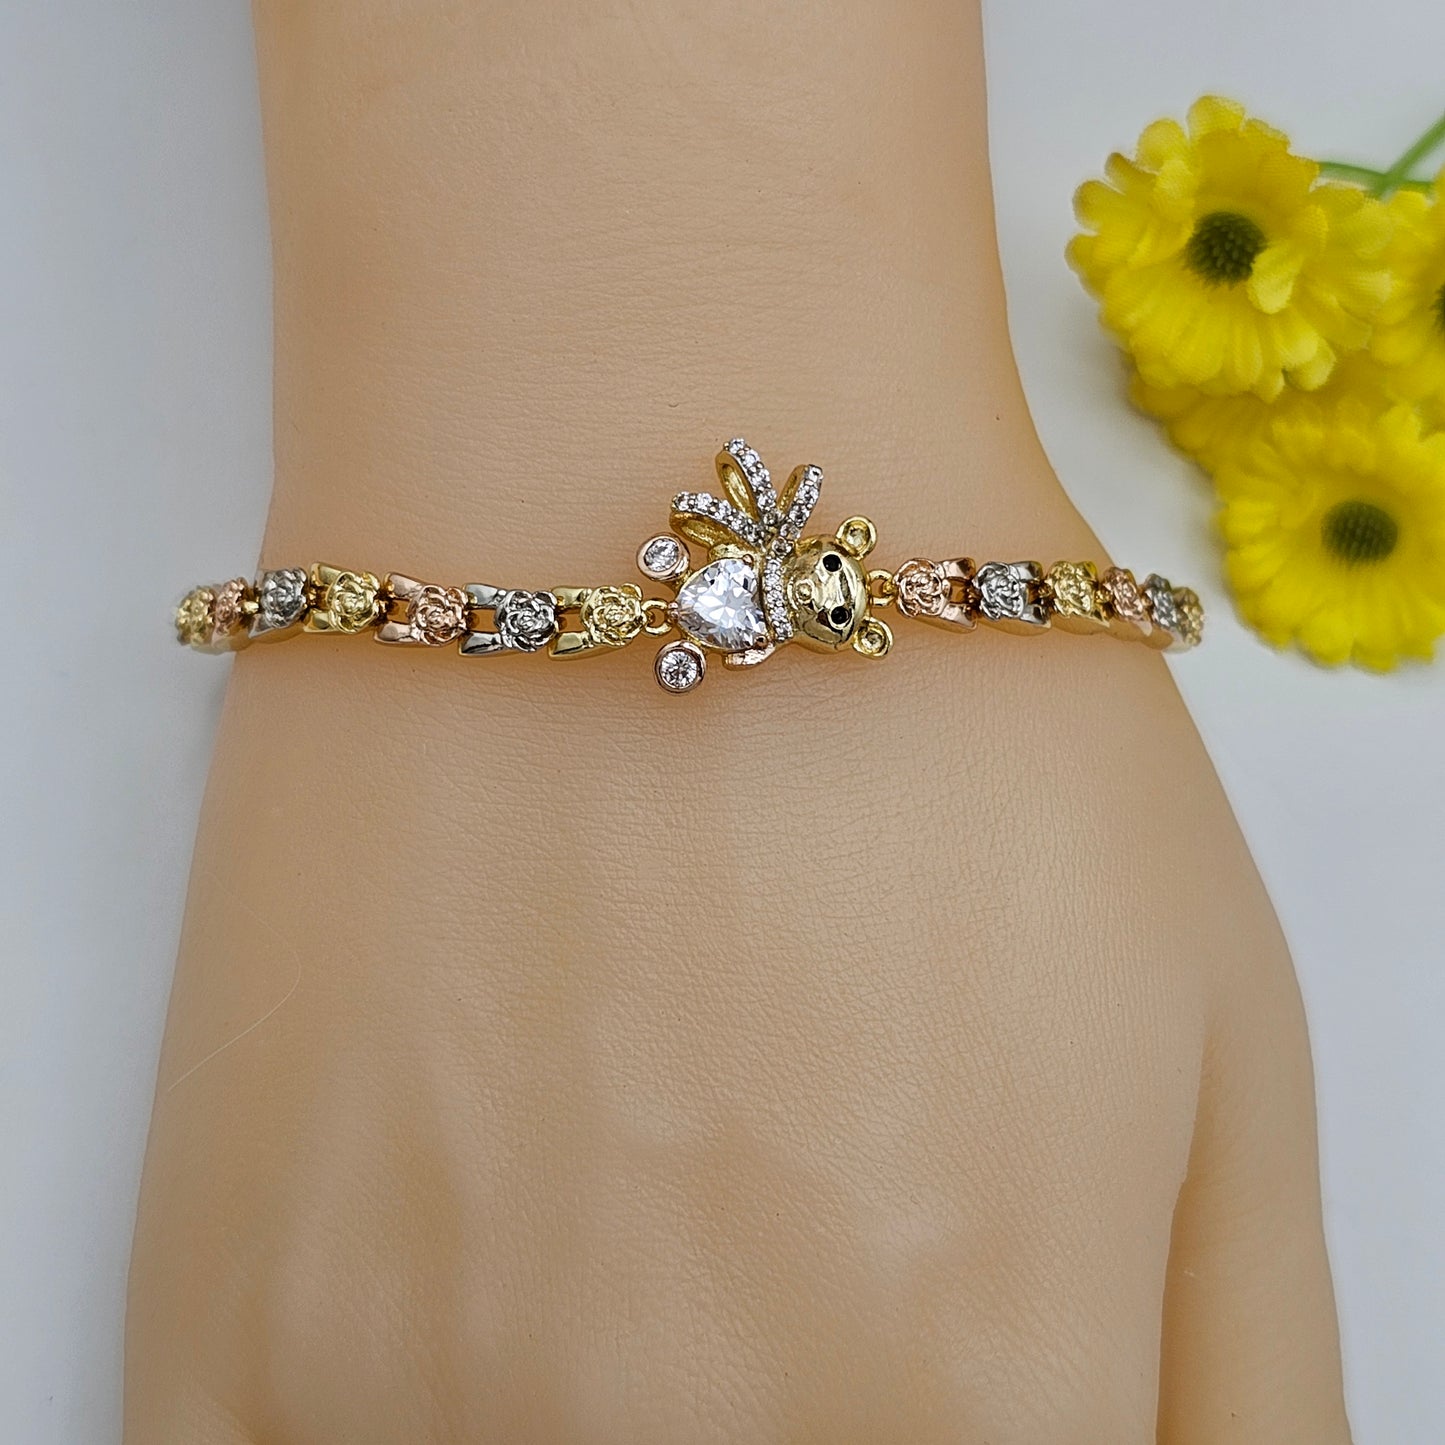 Bracelets - Tri Color Gold Plated. Bear - Flower Chain Bracelet